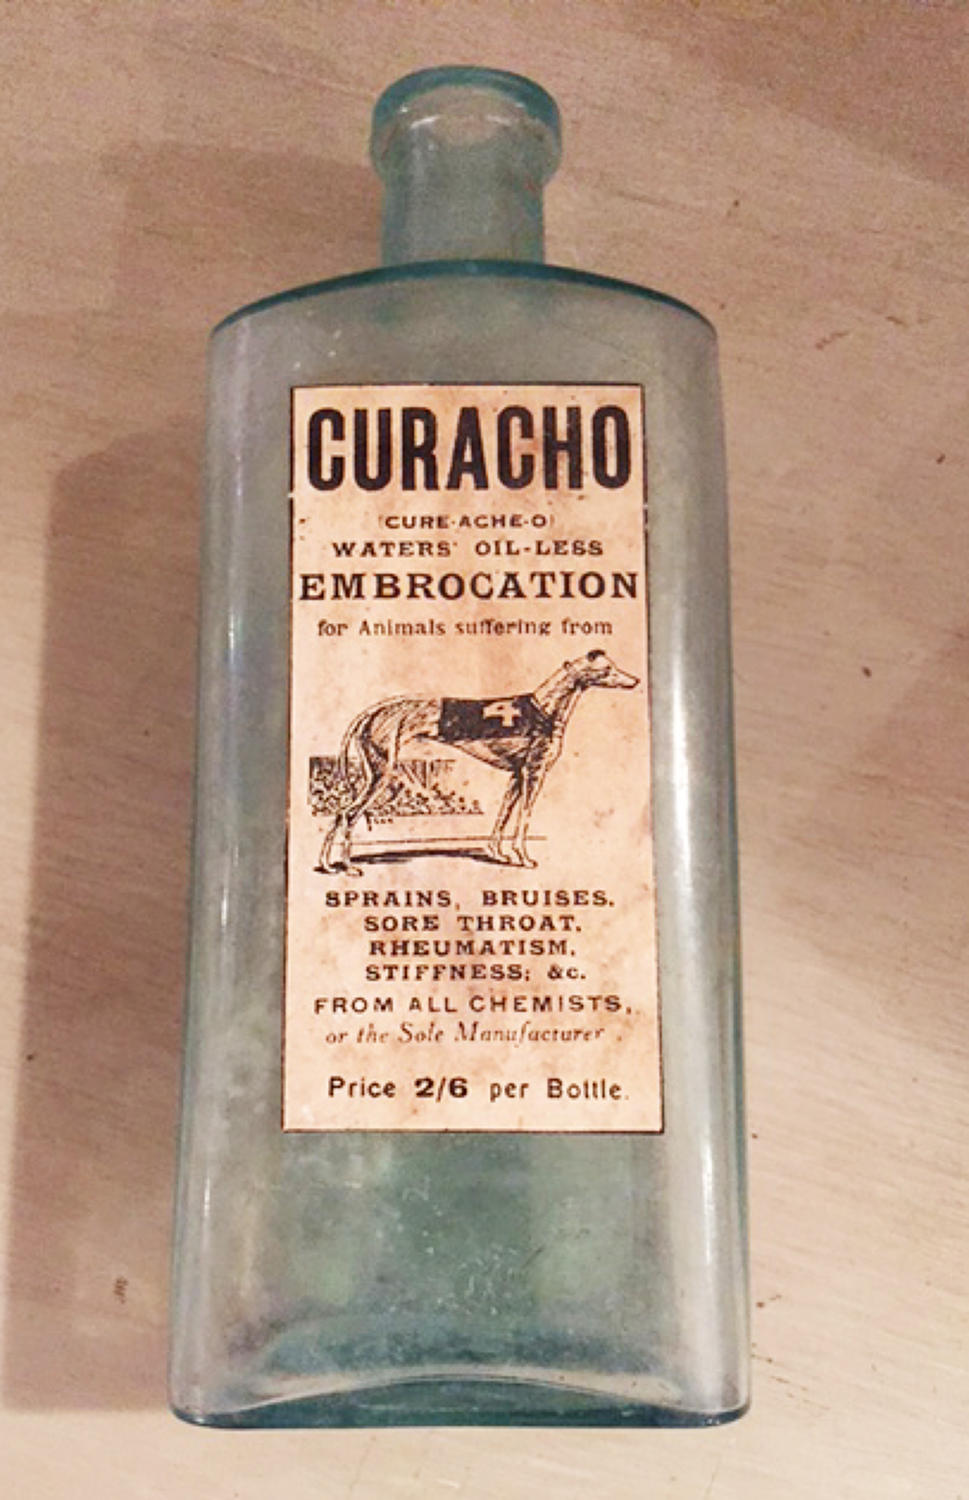 Curacho Embrocation bottle